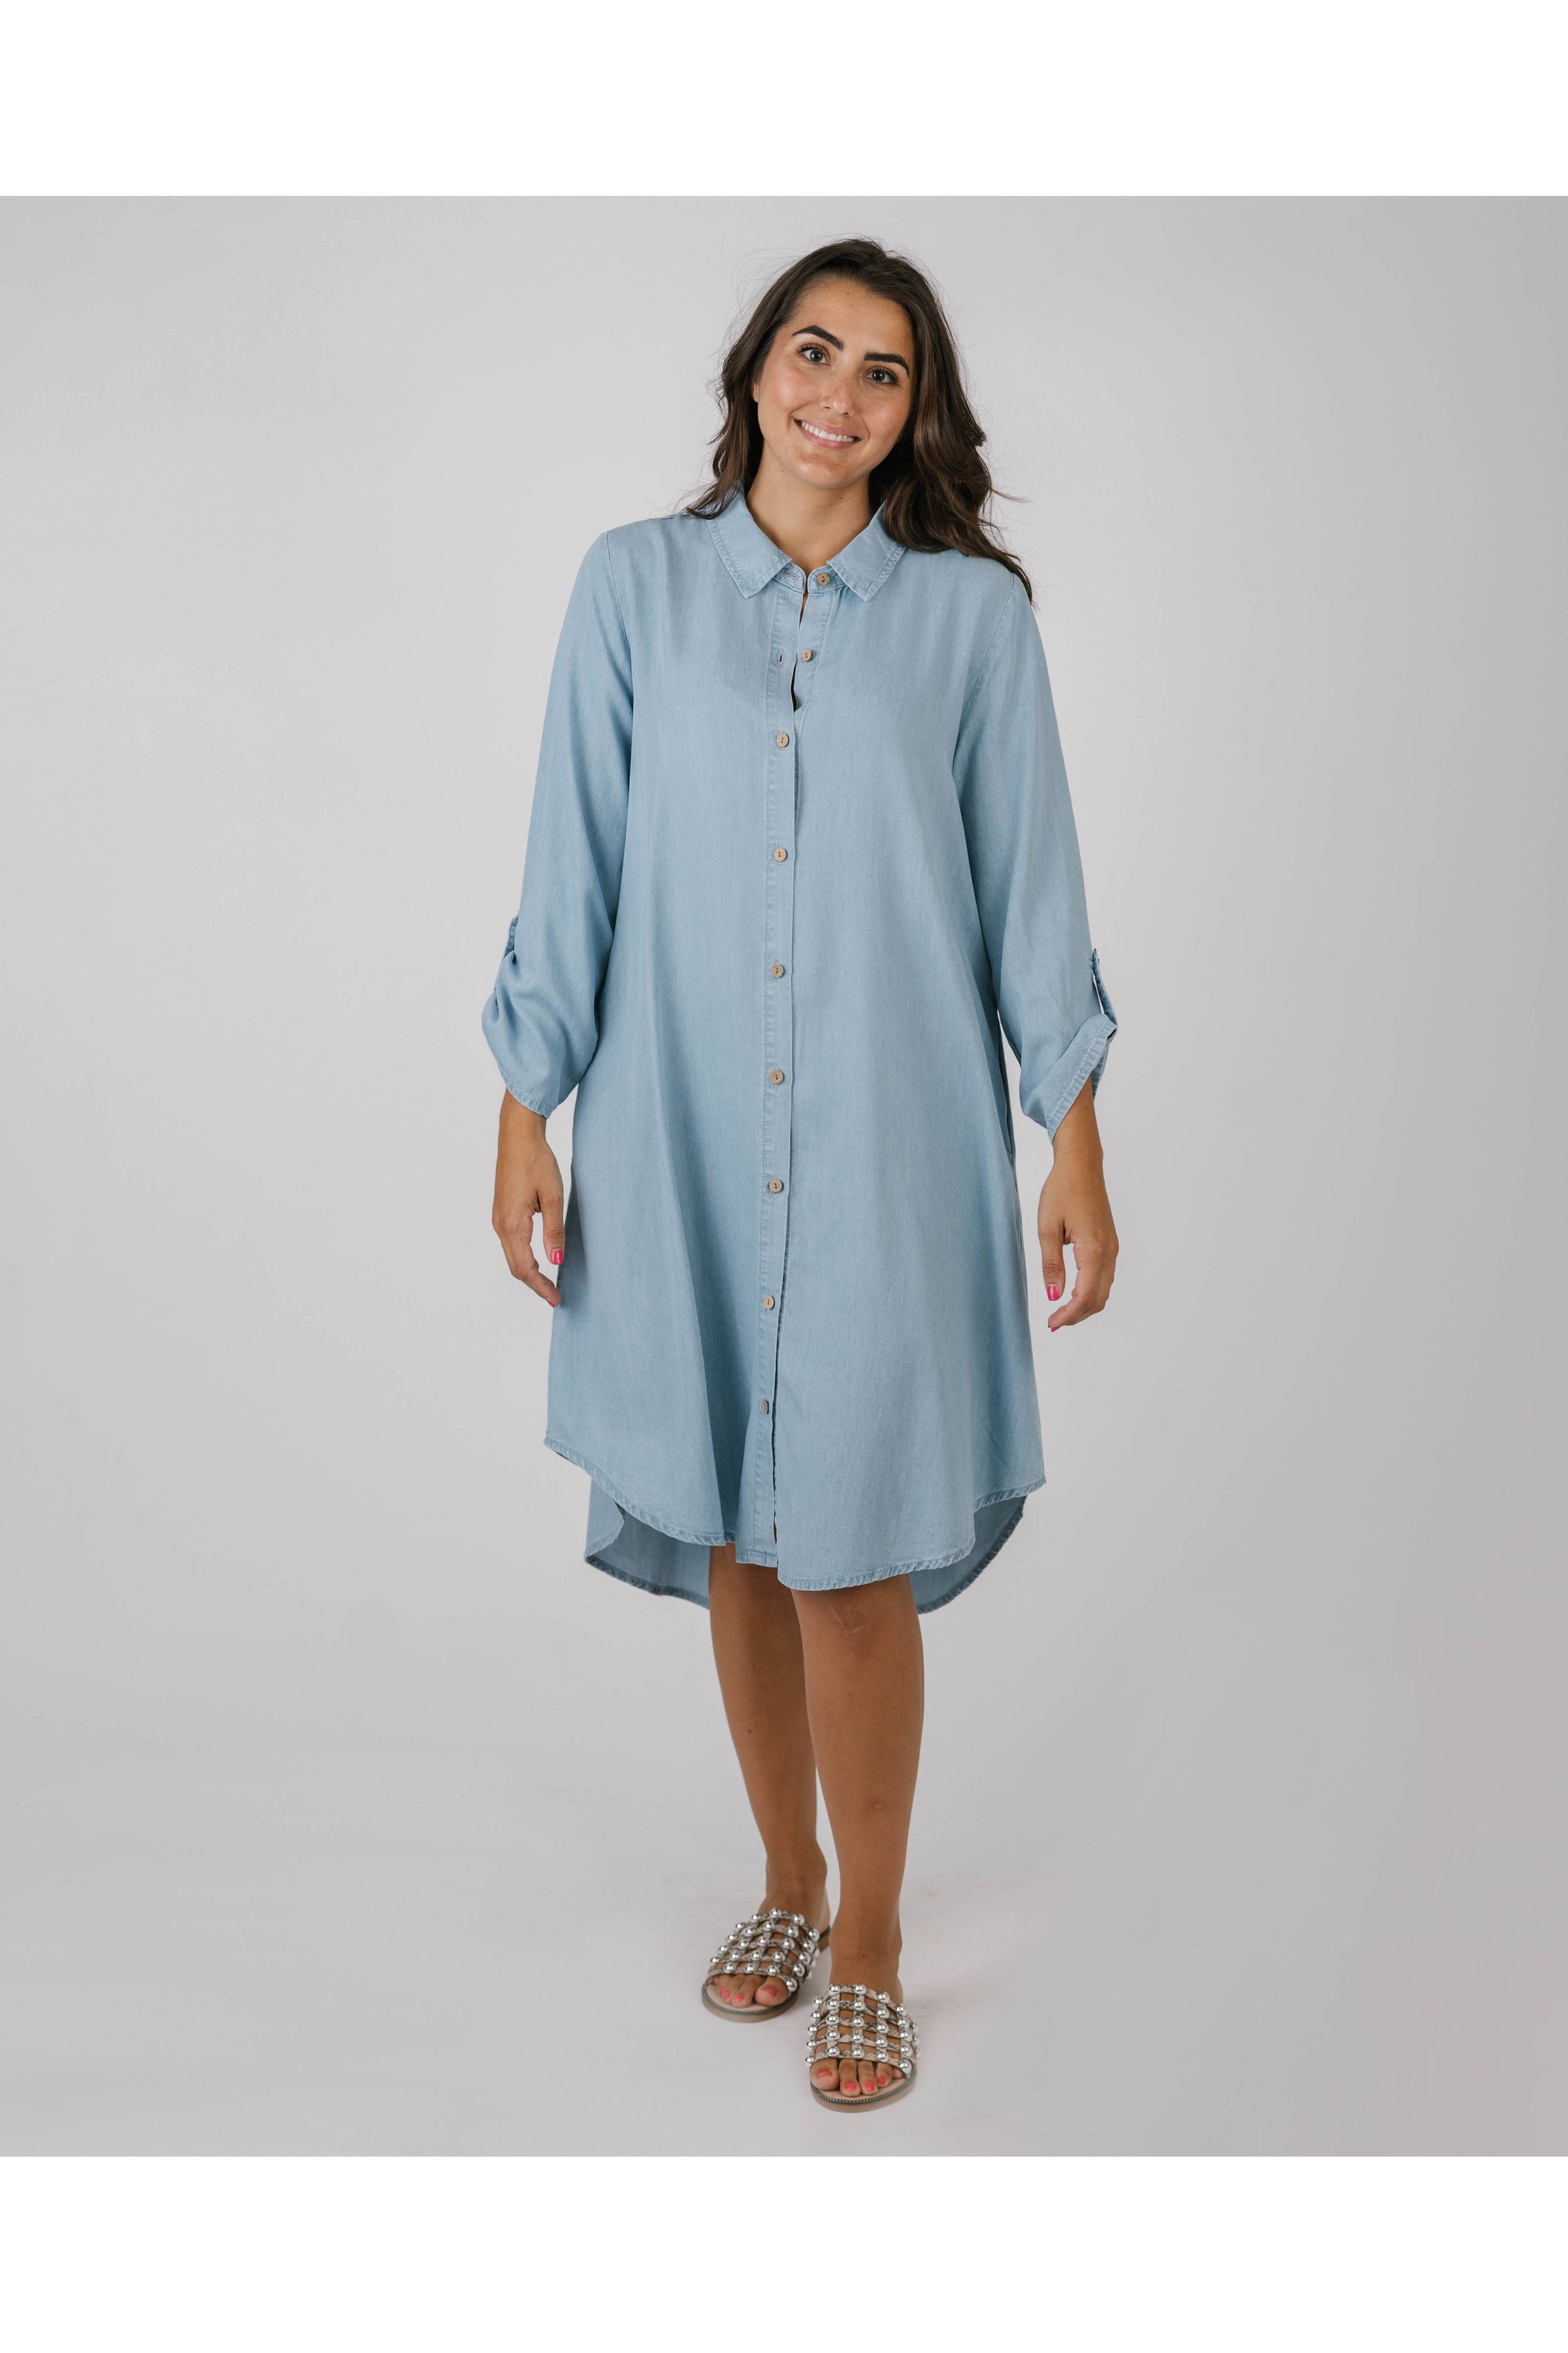 Shannon Passero Janie Shirt Dress - Style 1480